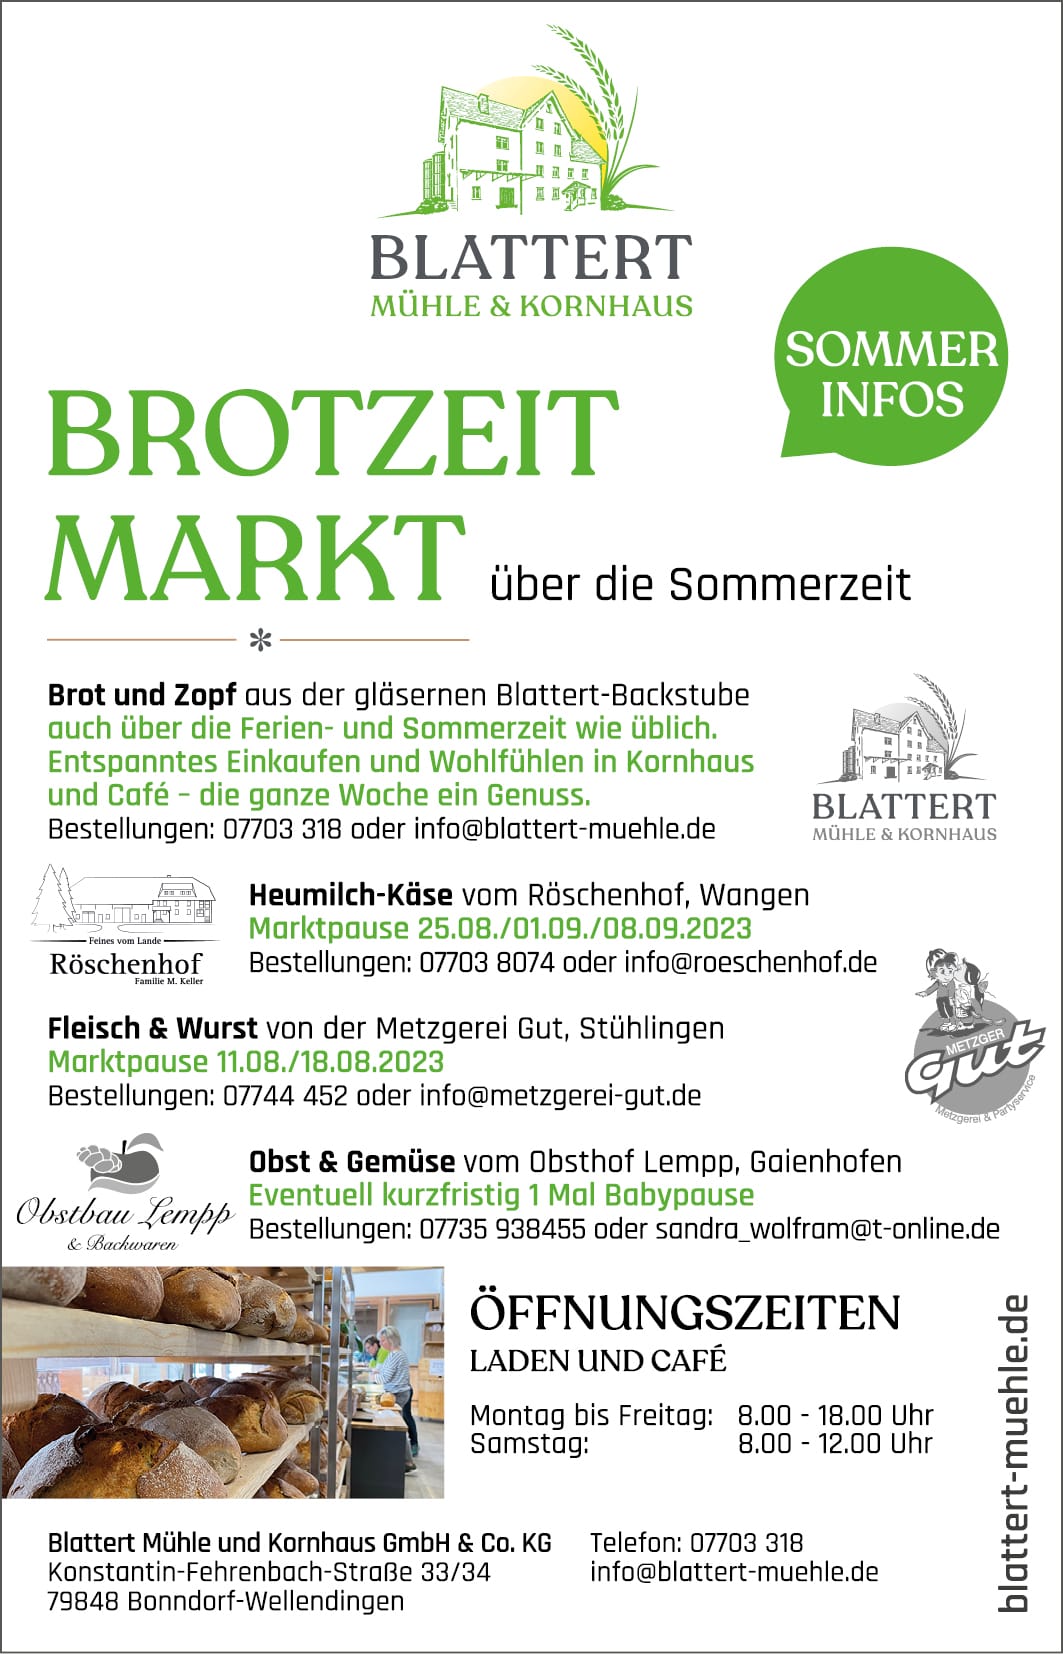 You are currently viewing Brotzeit Markt an der Blattert Mühle Sommer Infos